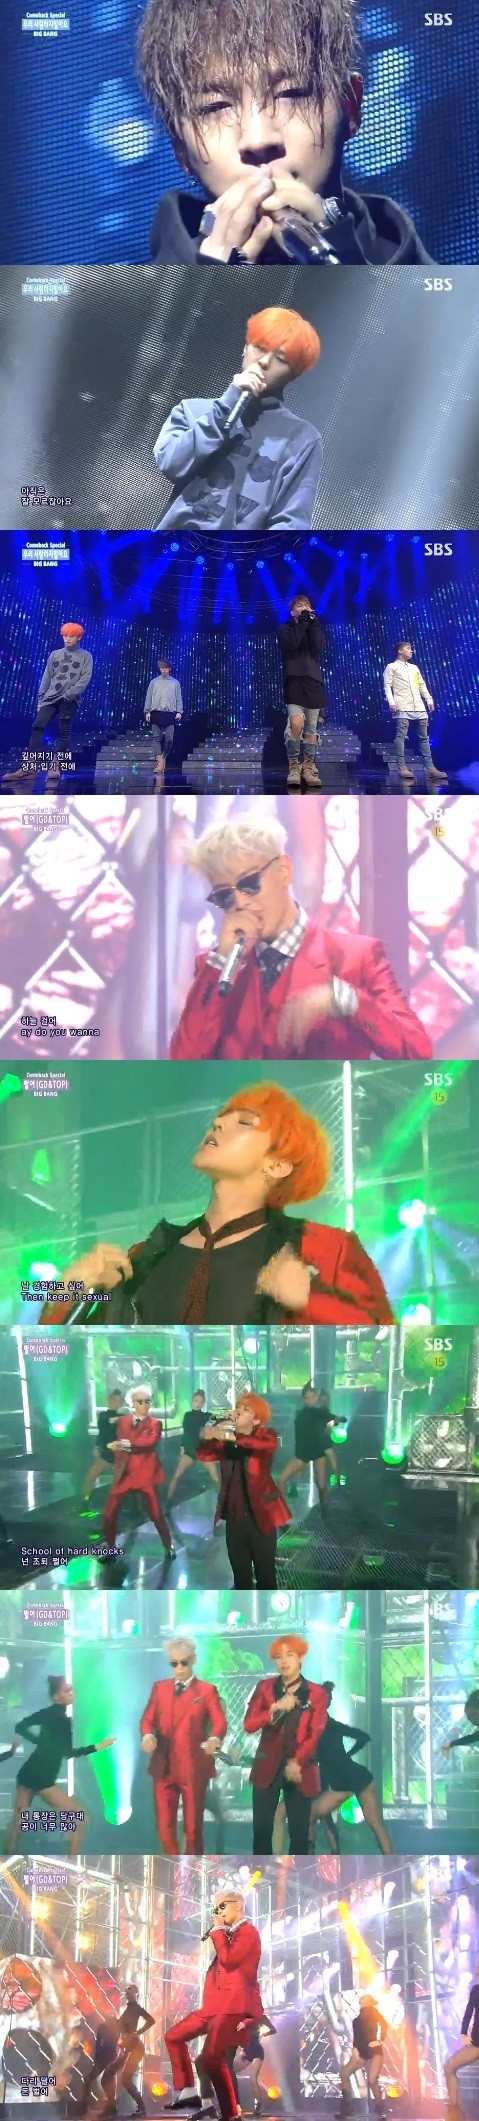 [Netizen] BIGBANG comeback stage Inkigayo 201508091526631139_1_99_20150809163903